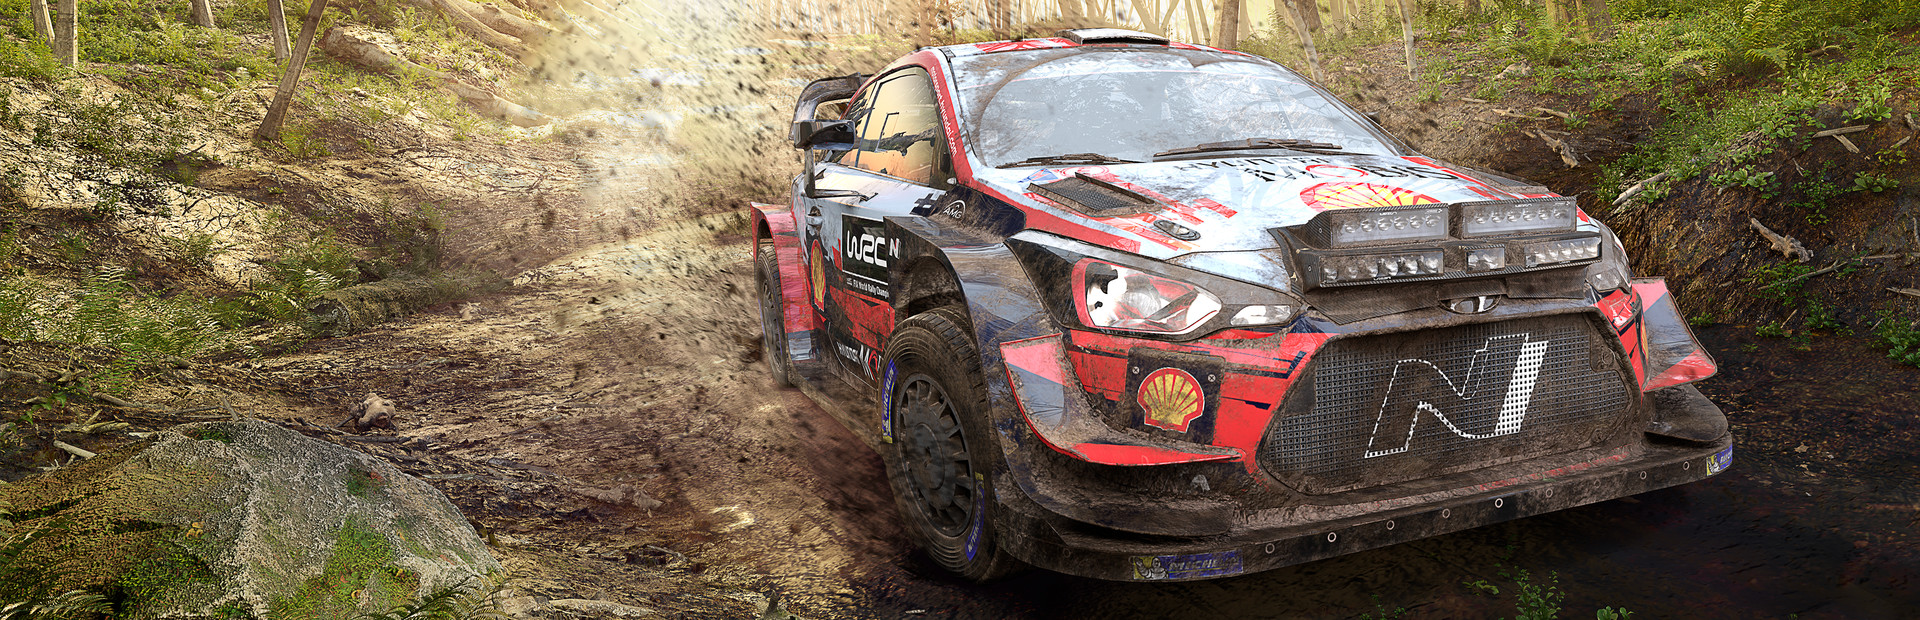 WRC 9 FIA World Rally Championship cover image